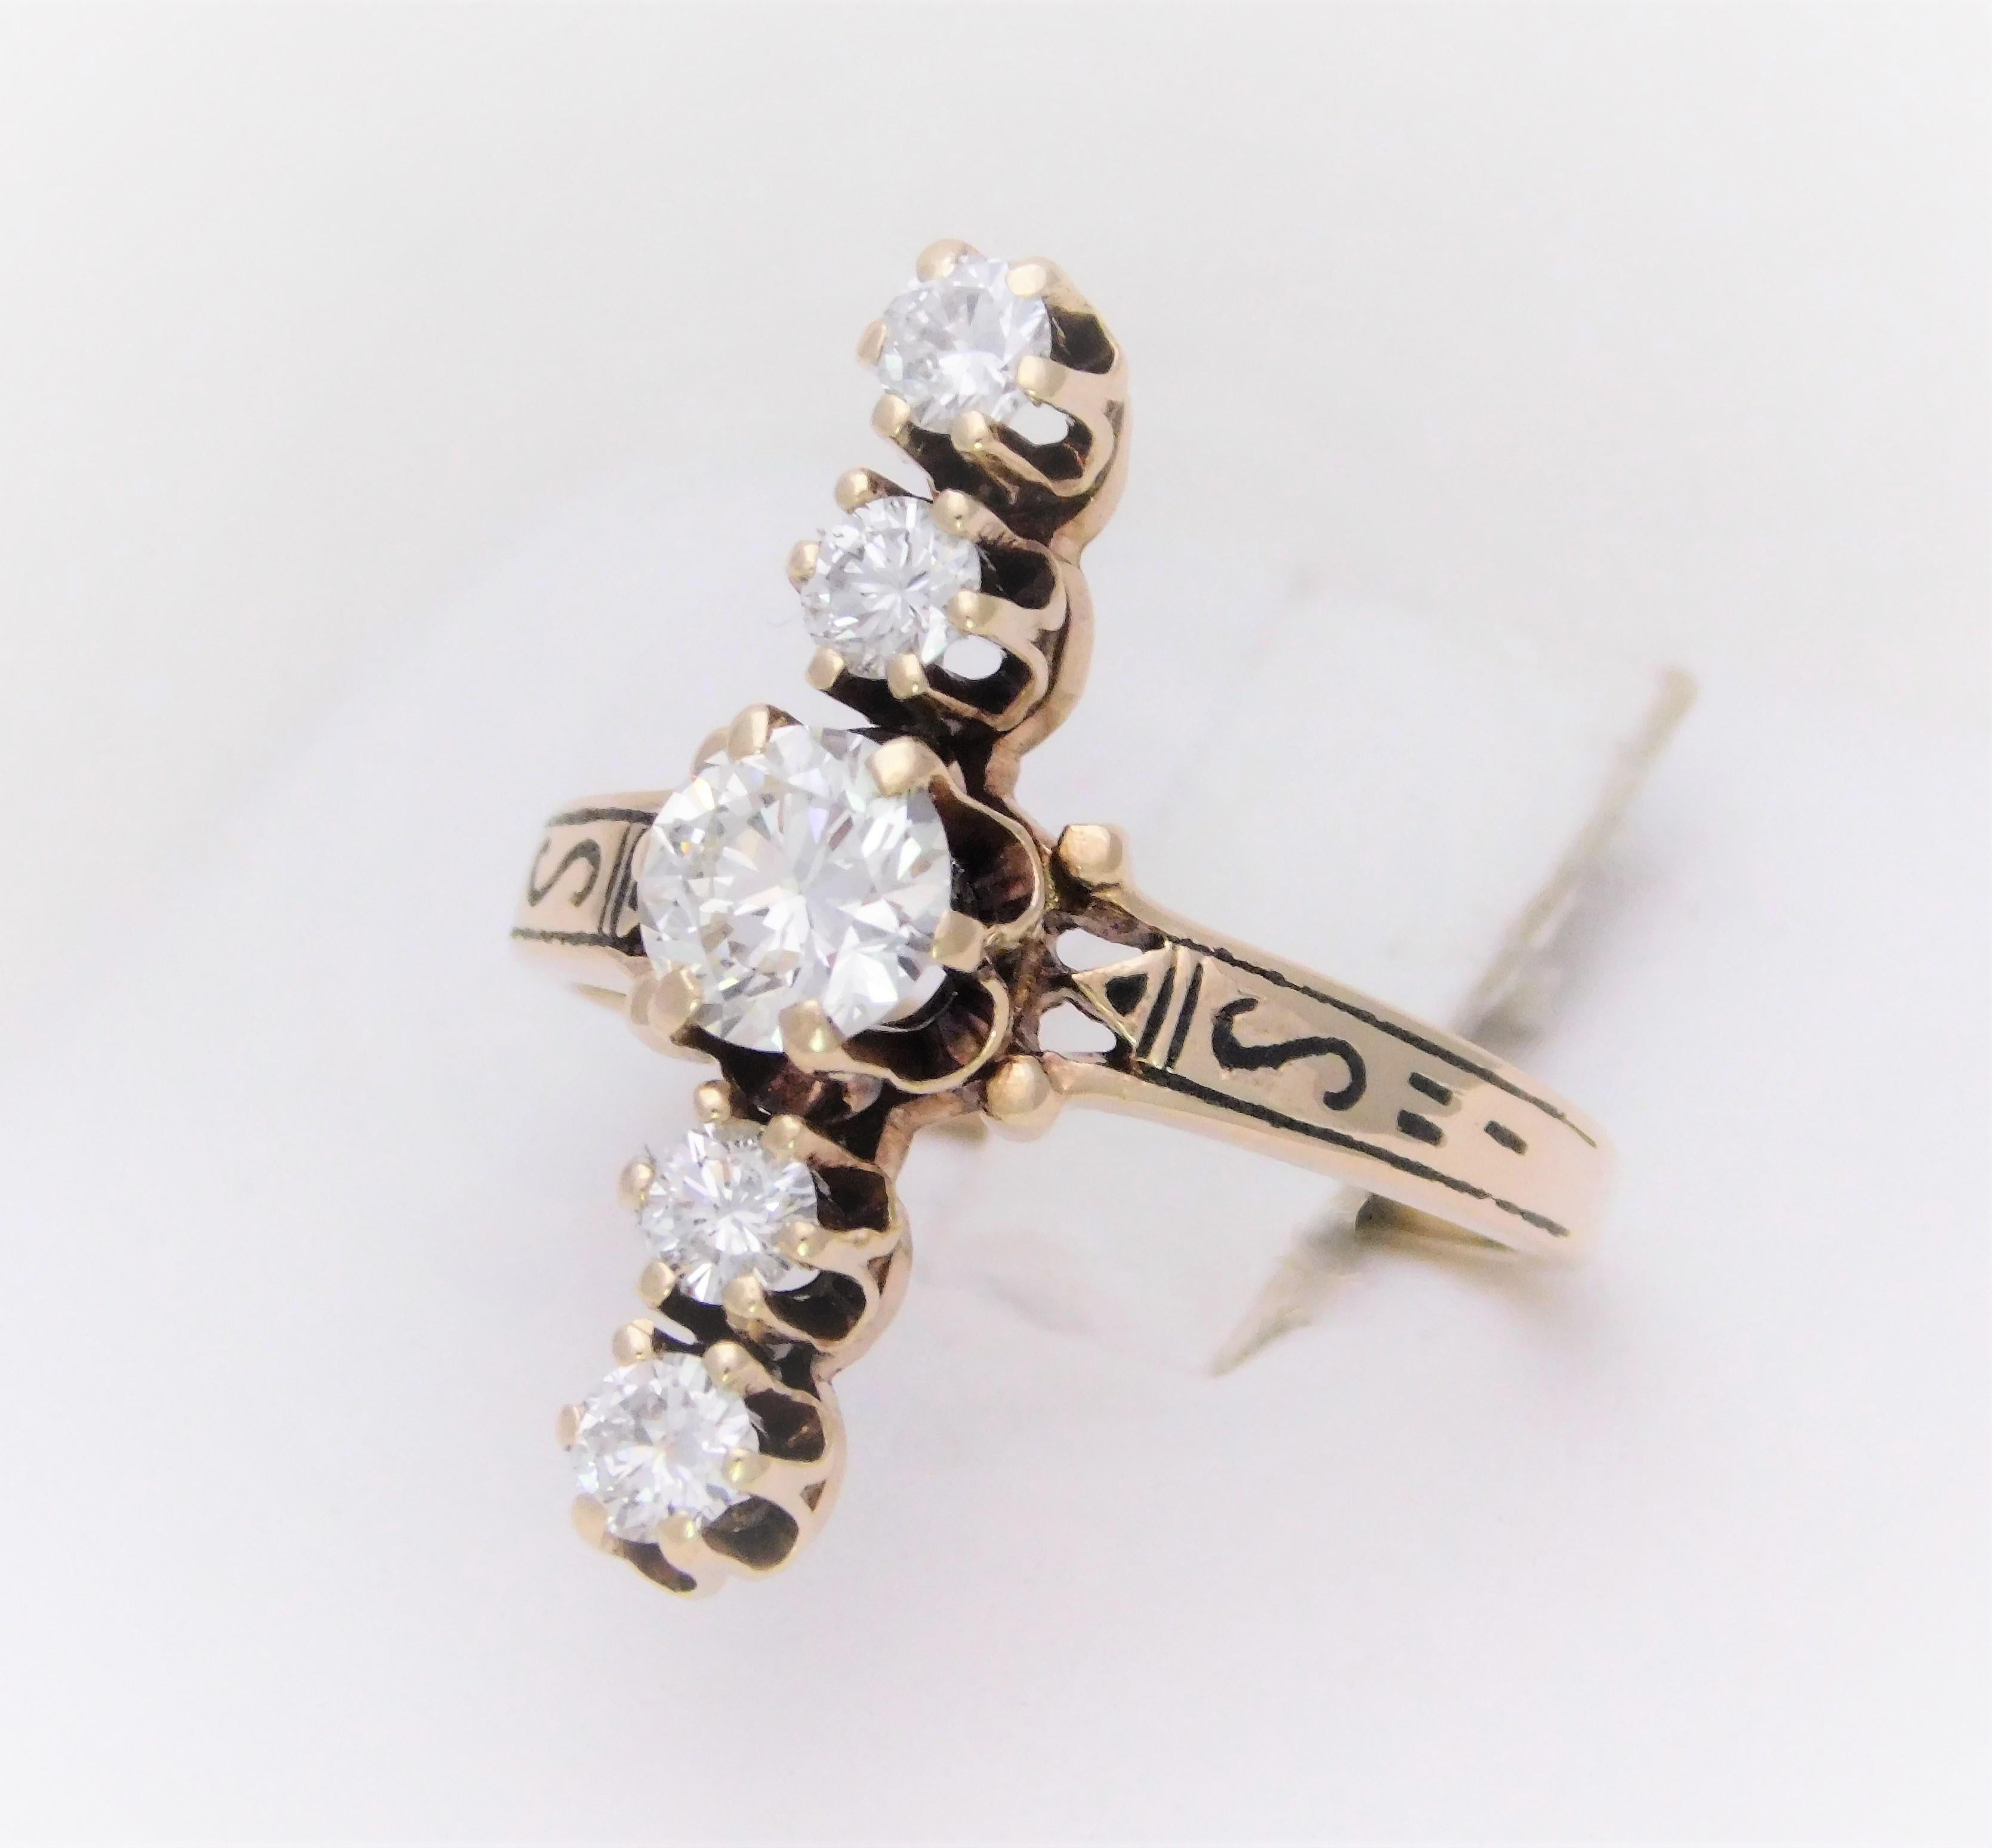 Unique Midcentury 1.22 Carat Diamond “Line” Cocktail Ring For Sale 2